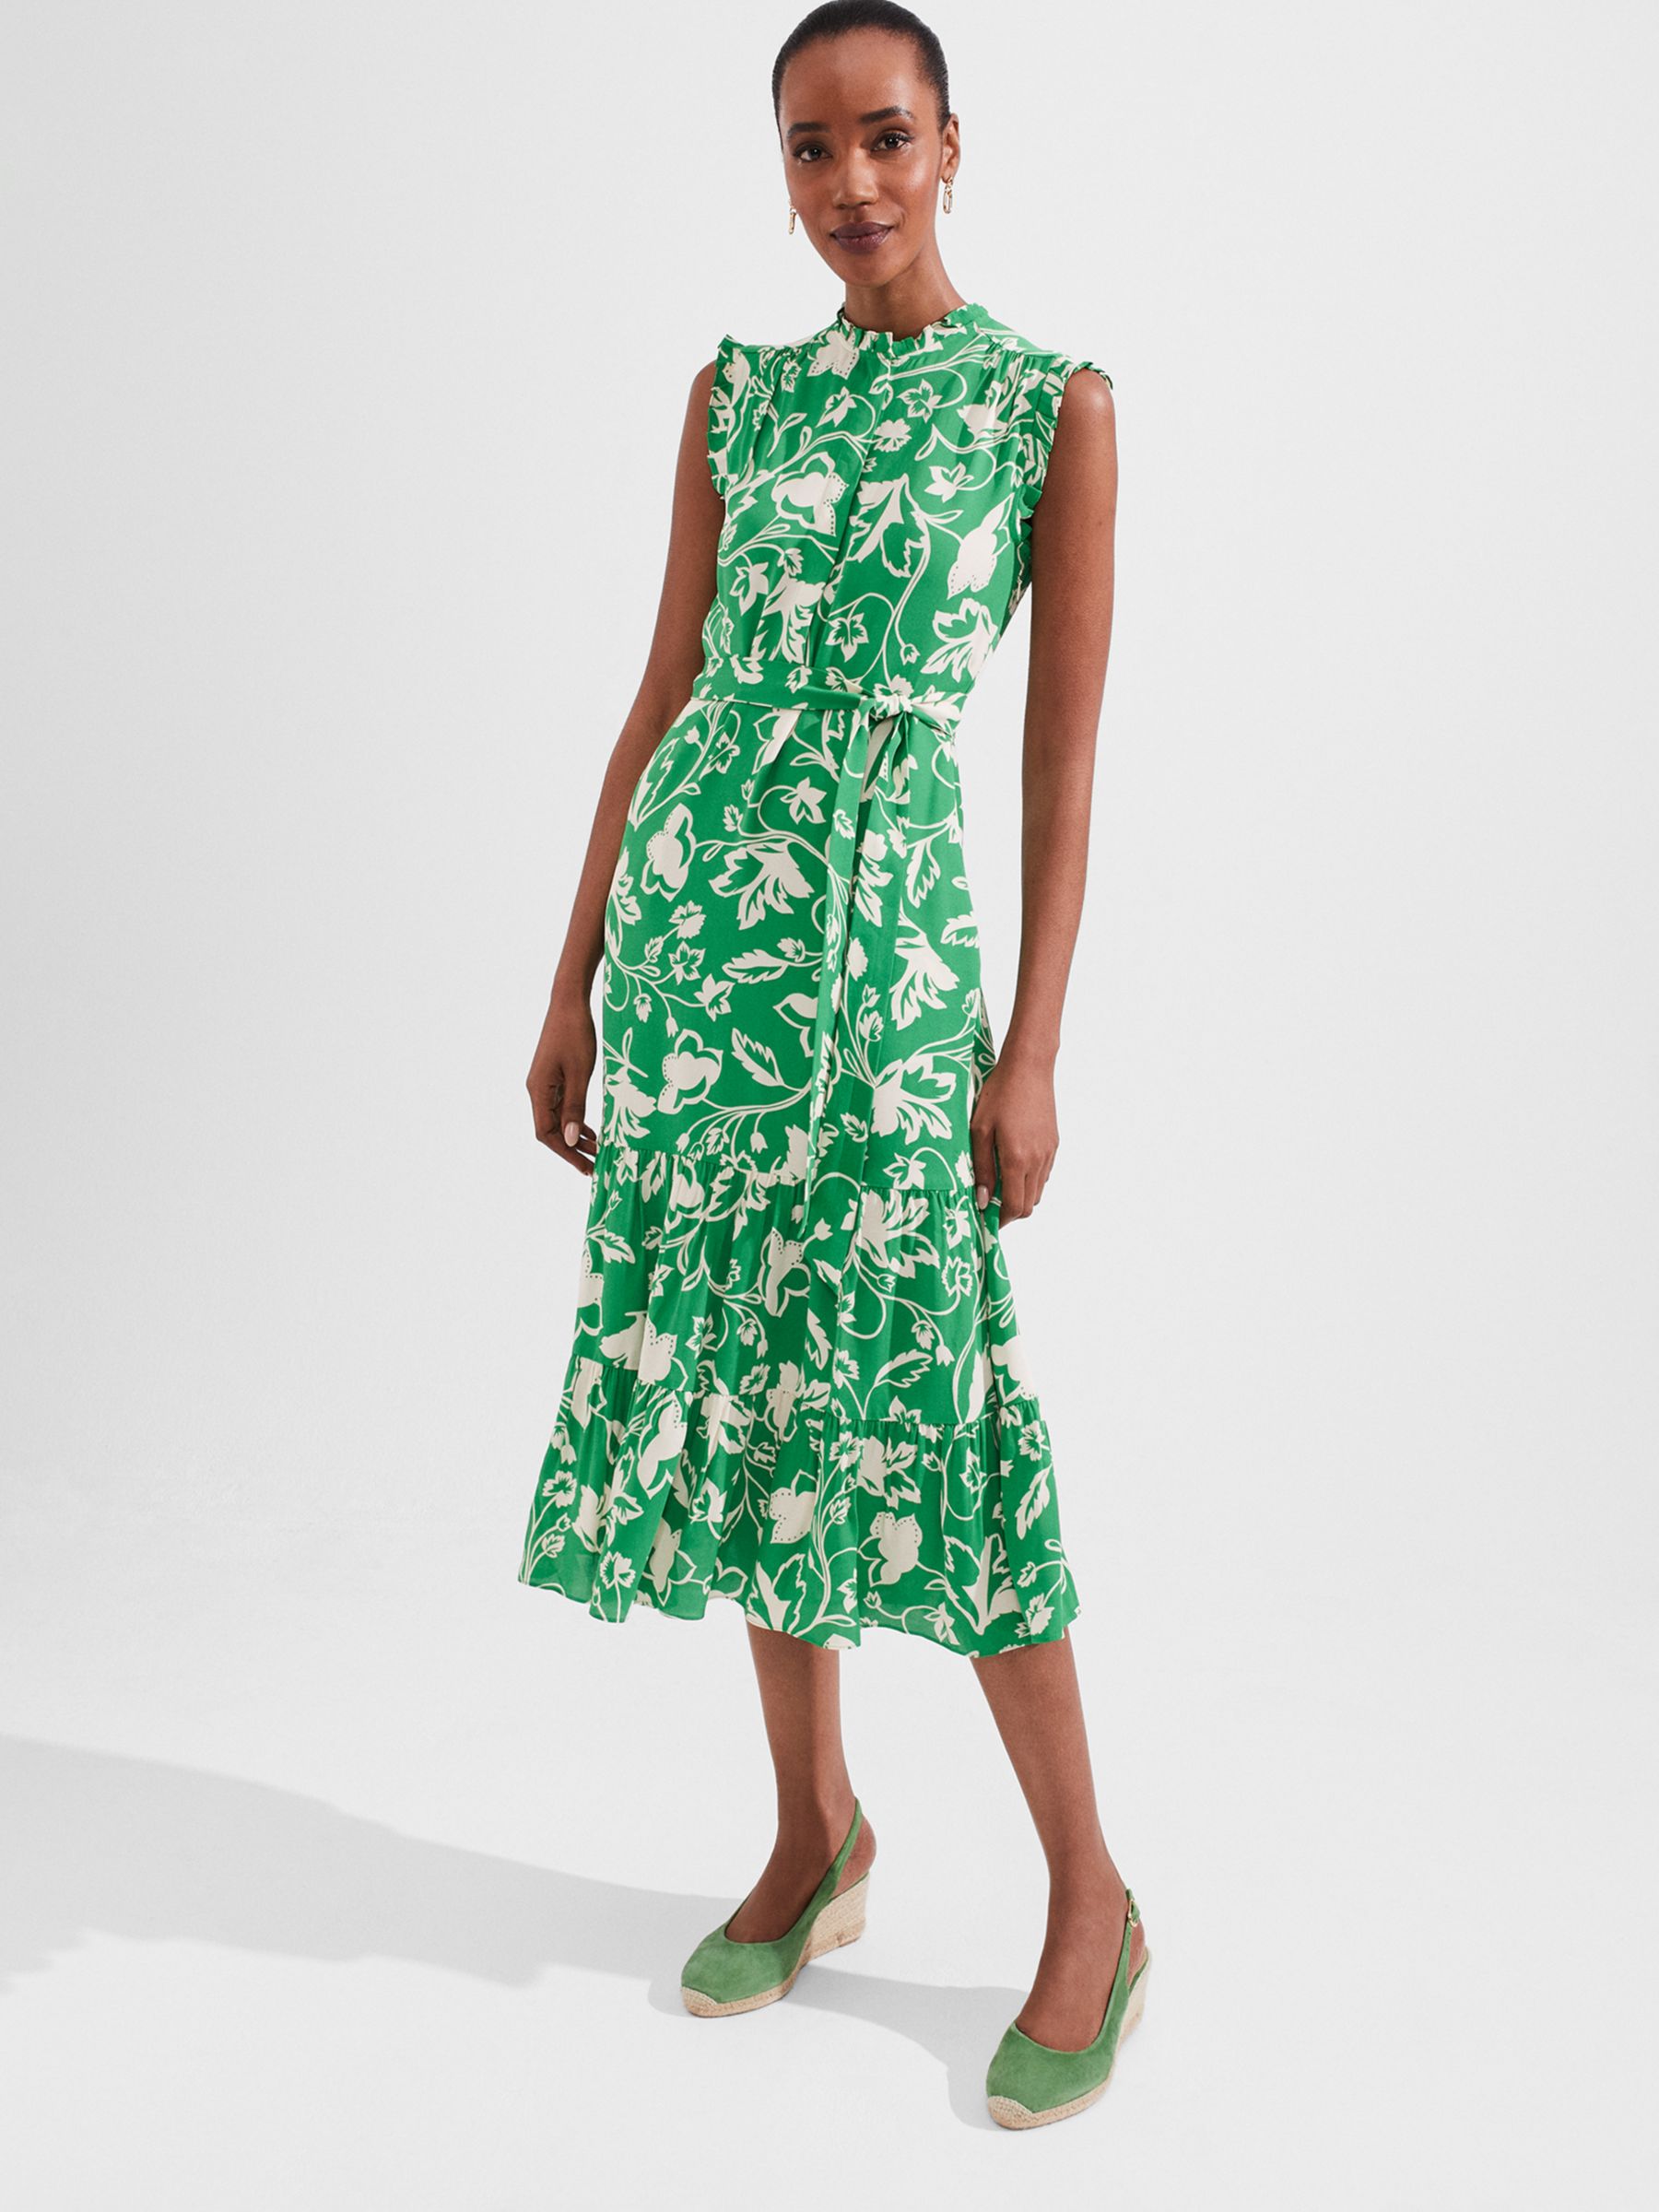 Hobbs Elsa Floral Frill Neck Midi Dress, Green/Ivory, 10